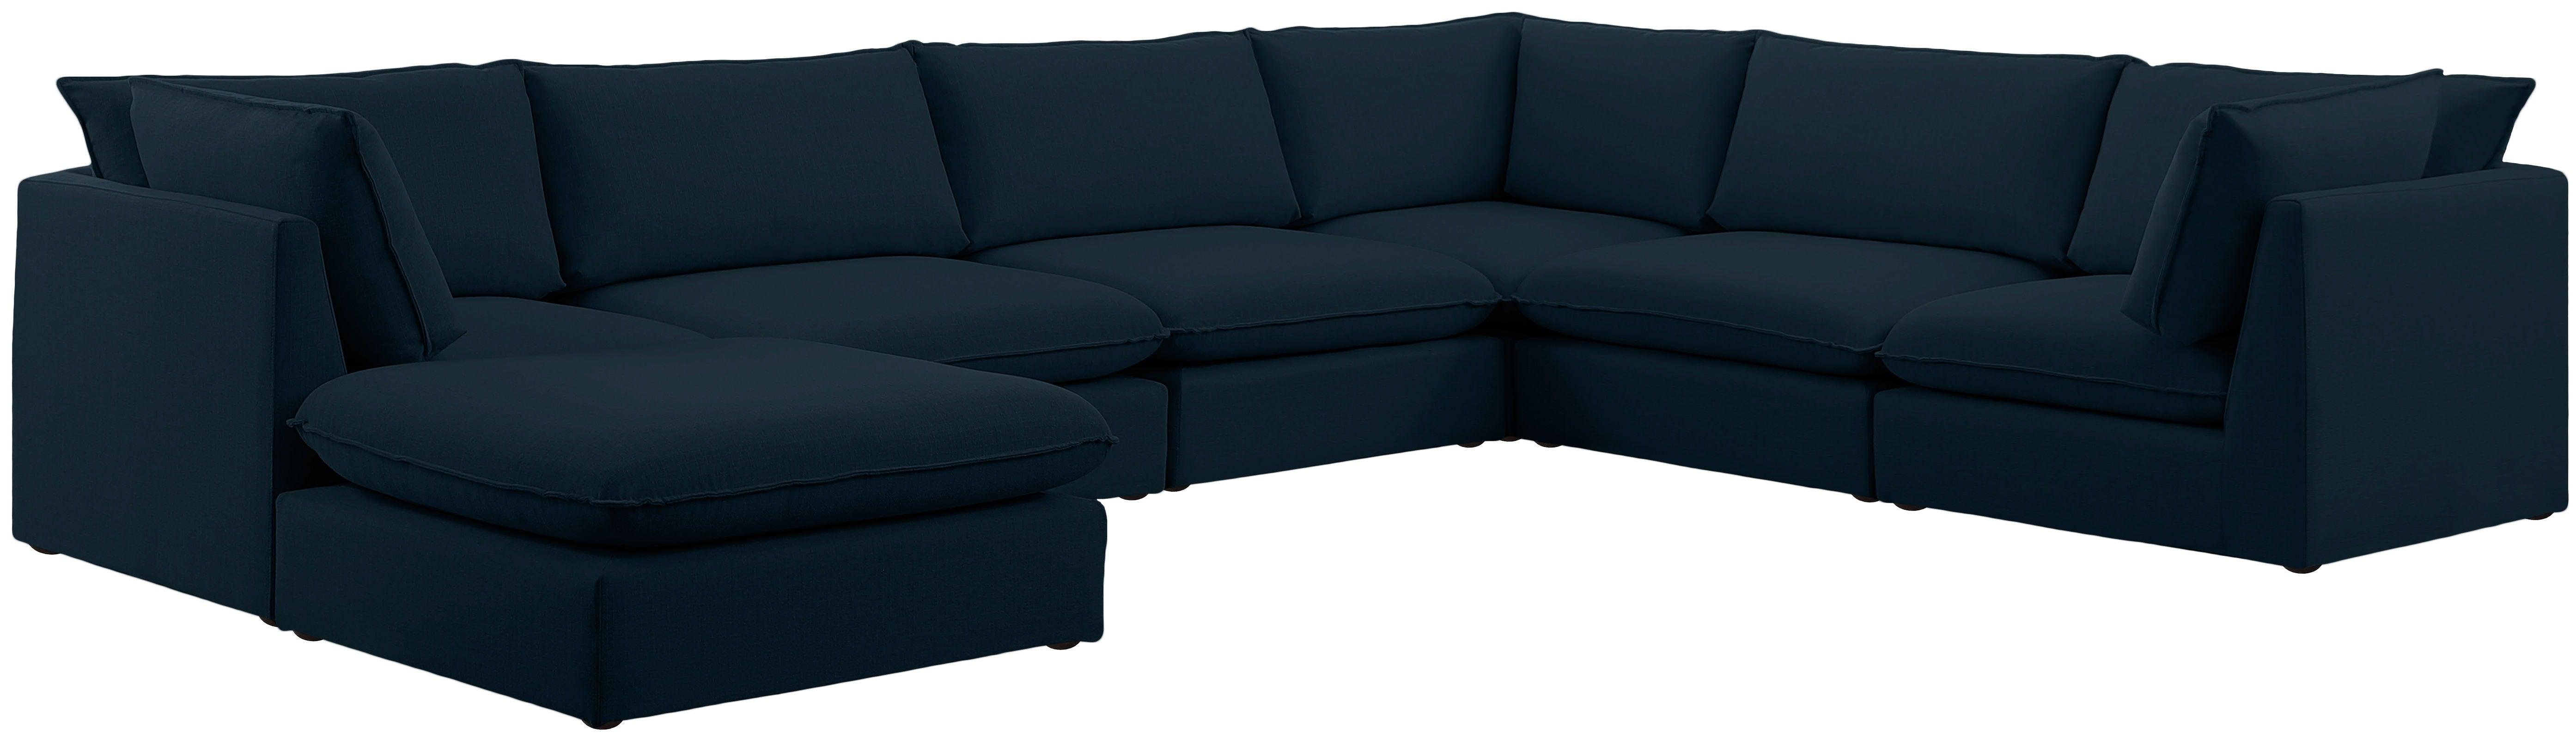 Meridian Furniture - Mackenzie - Modular Sectional 7 Piece - Navy - 5th Avenue Furniture